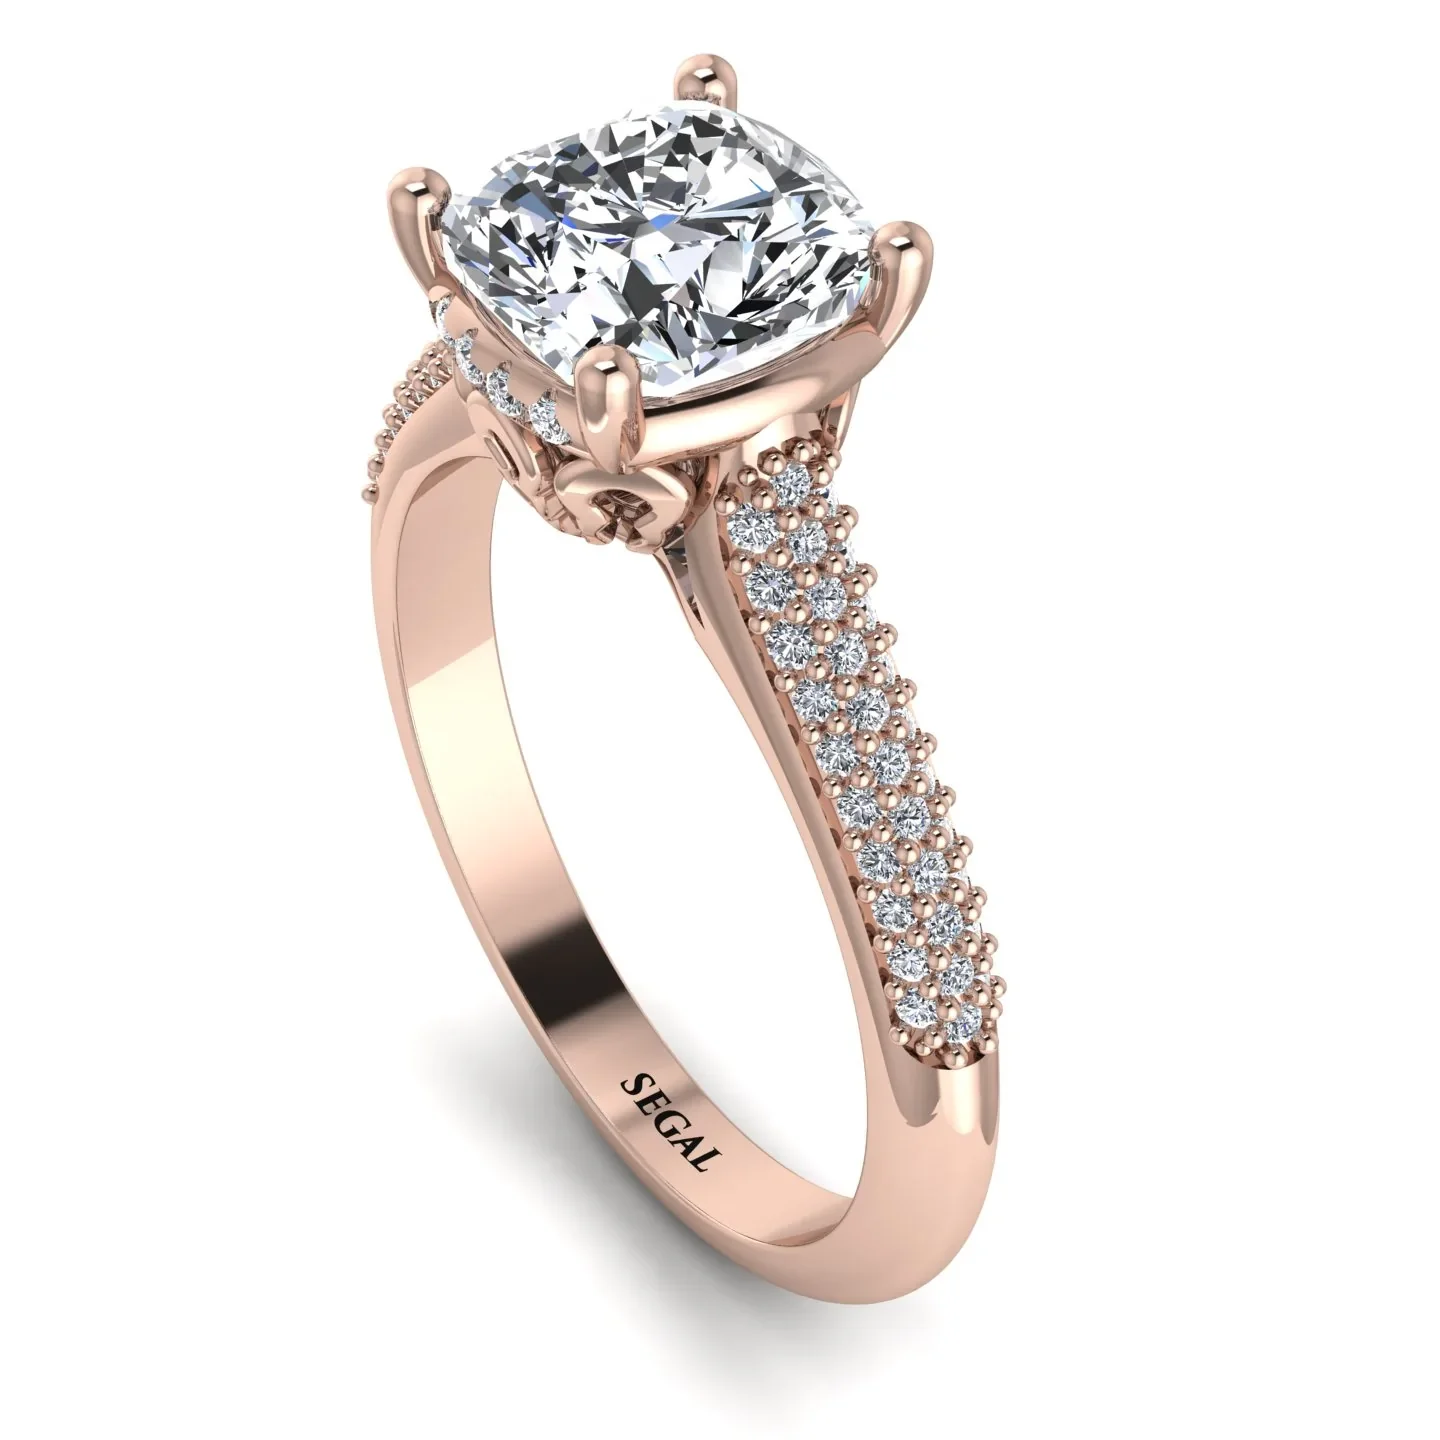 Image of Luxury Pave Cushion Cut Diamond Engagement Ring With Hidden Stone - Esmeralda No. 2